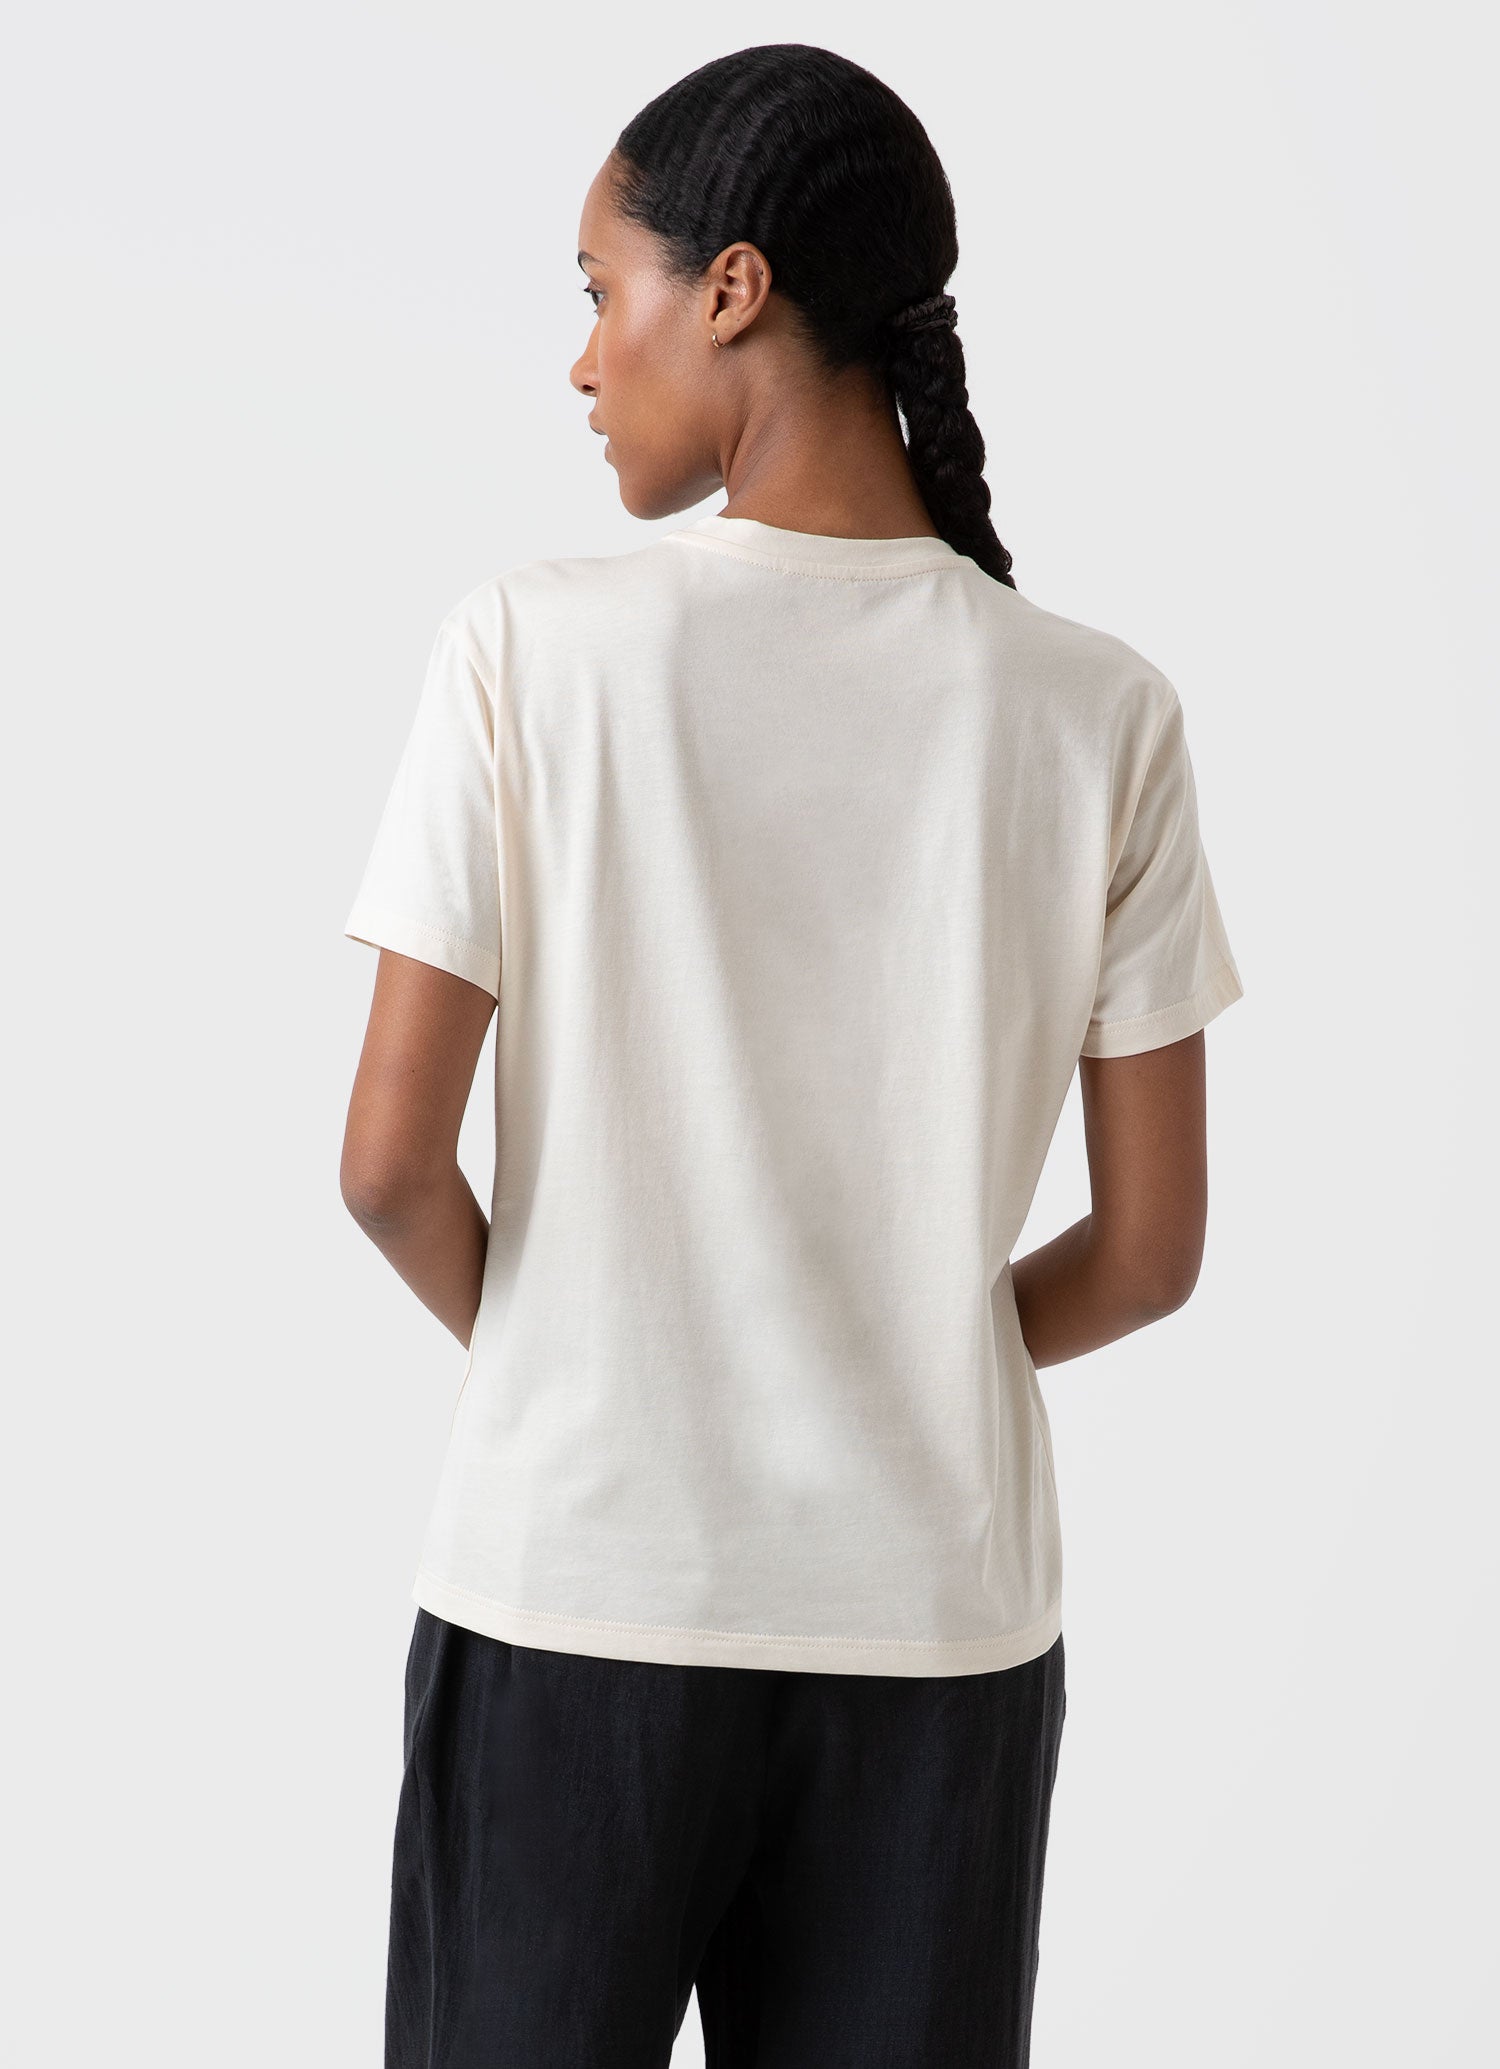 Women's Boy-Fit T-shirt in Undyed